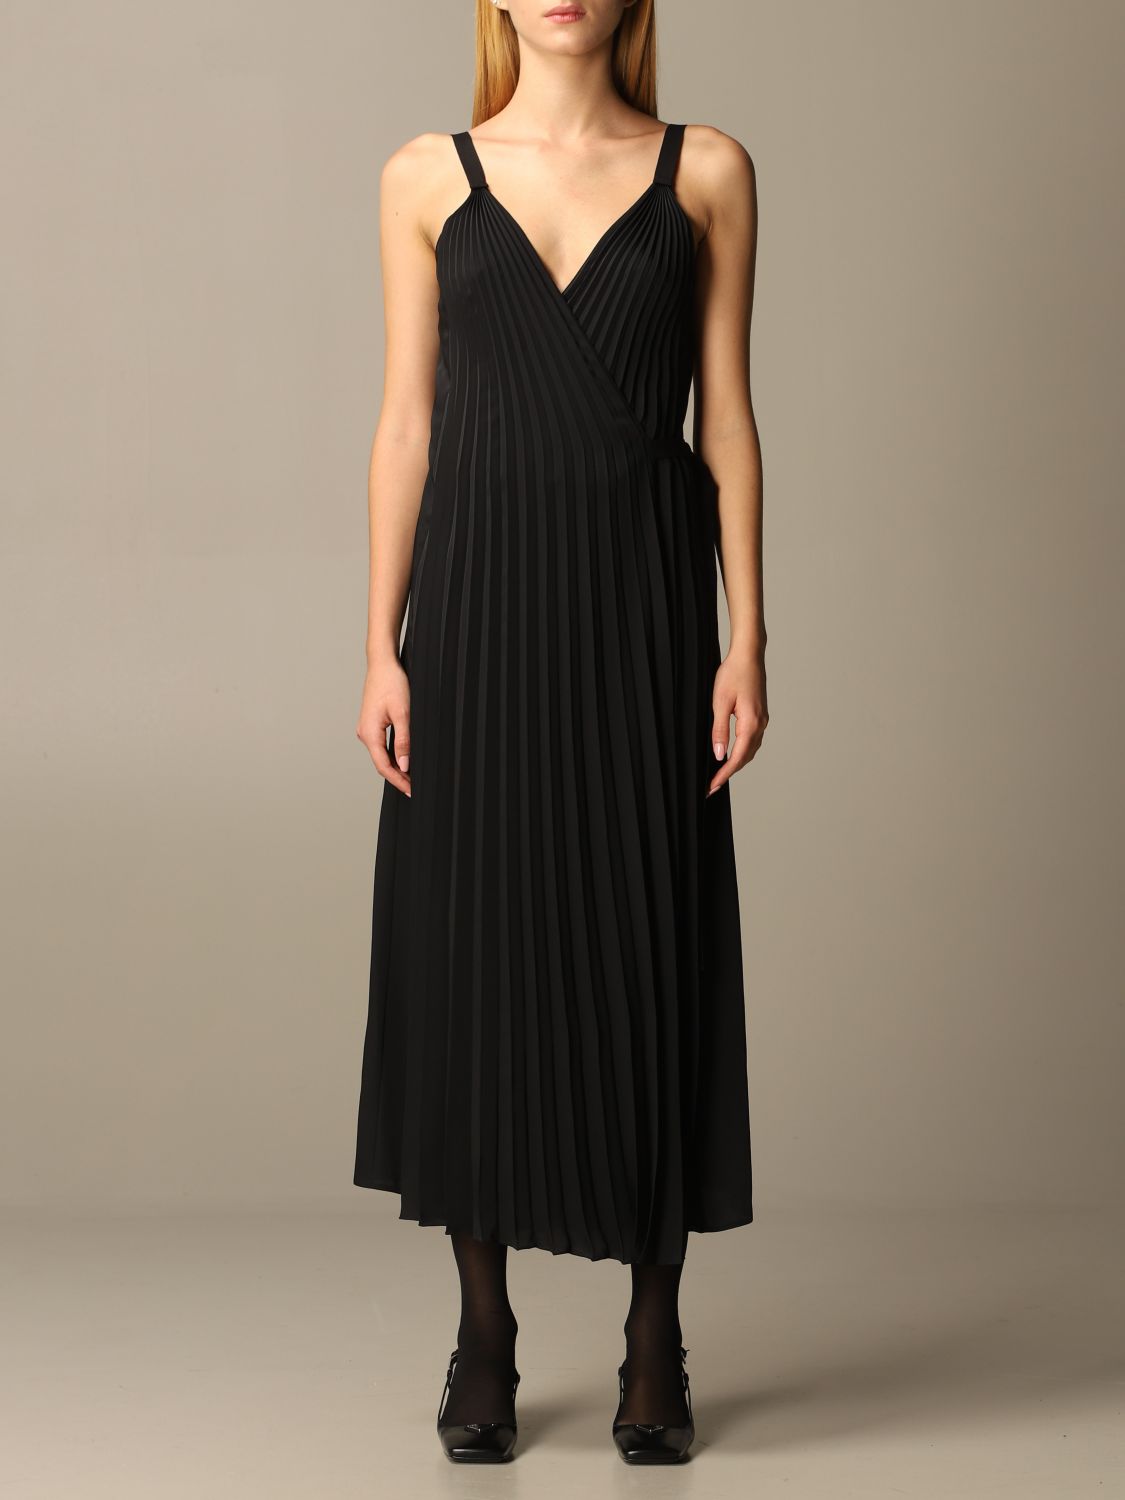 PRADA: dress for woman - Black | Prada dress P3A961 WHI online on 